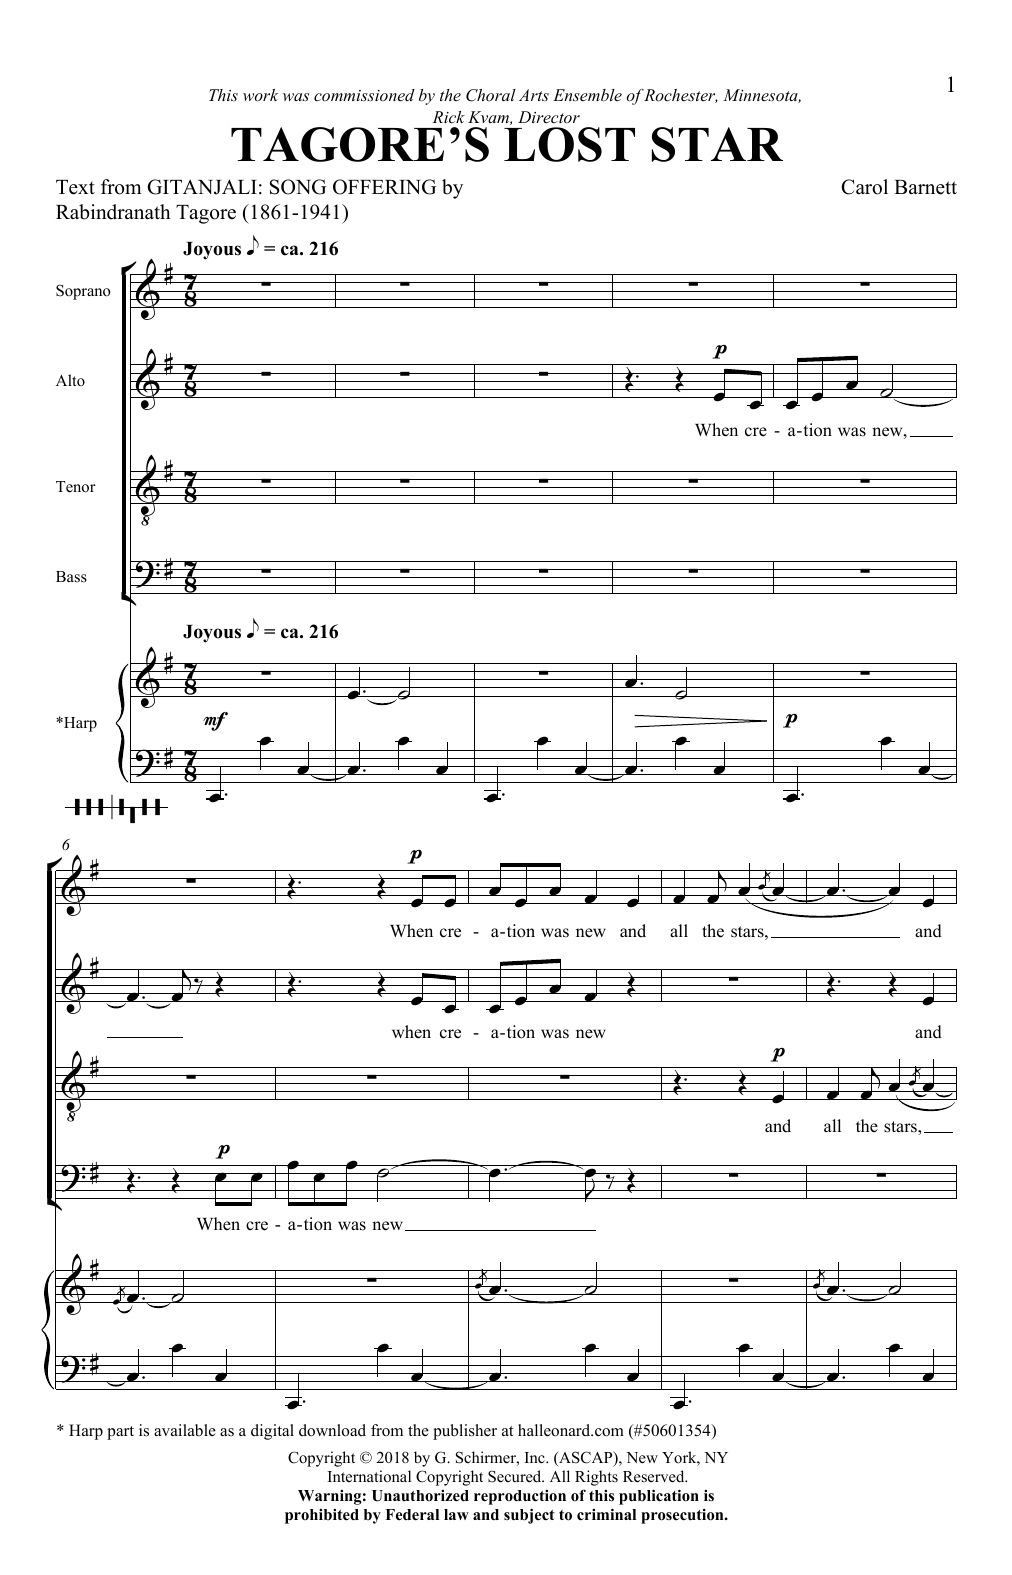 Carol Barnett Tagore's Lost Star Sheet Music Notes & Chords for SATB - Download or Print PDF